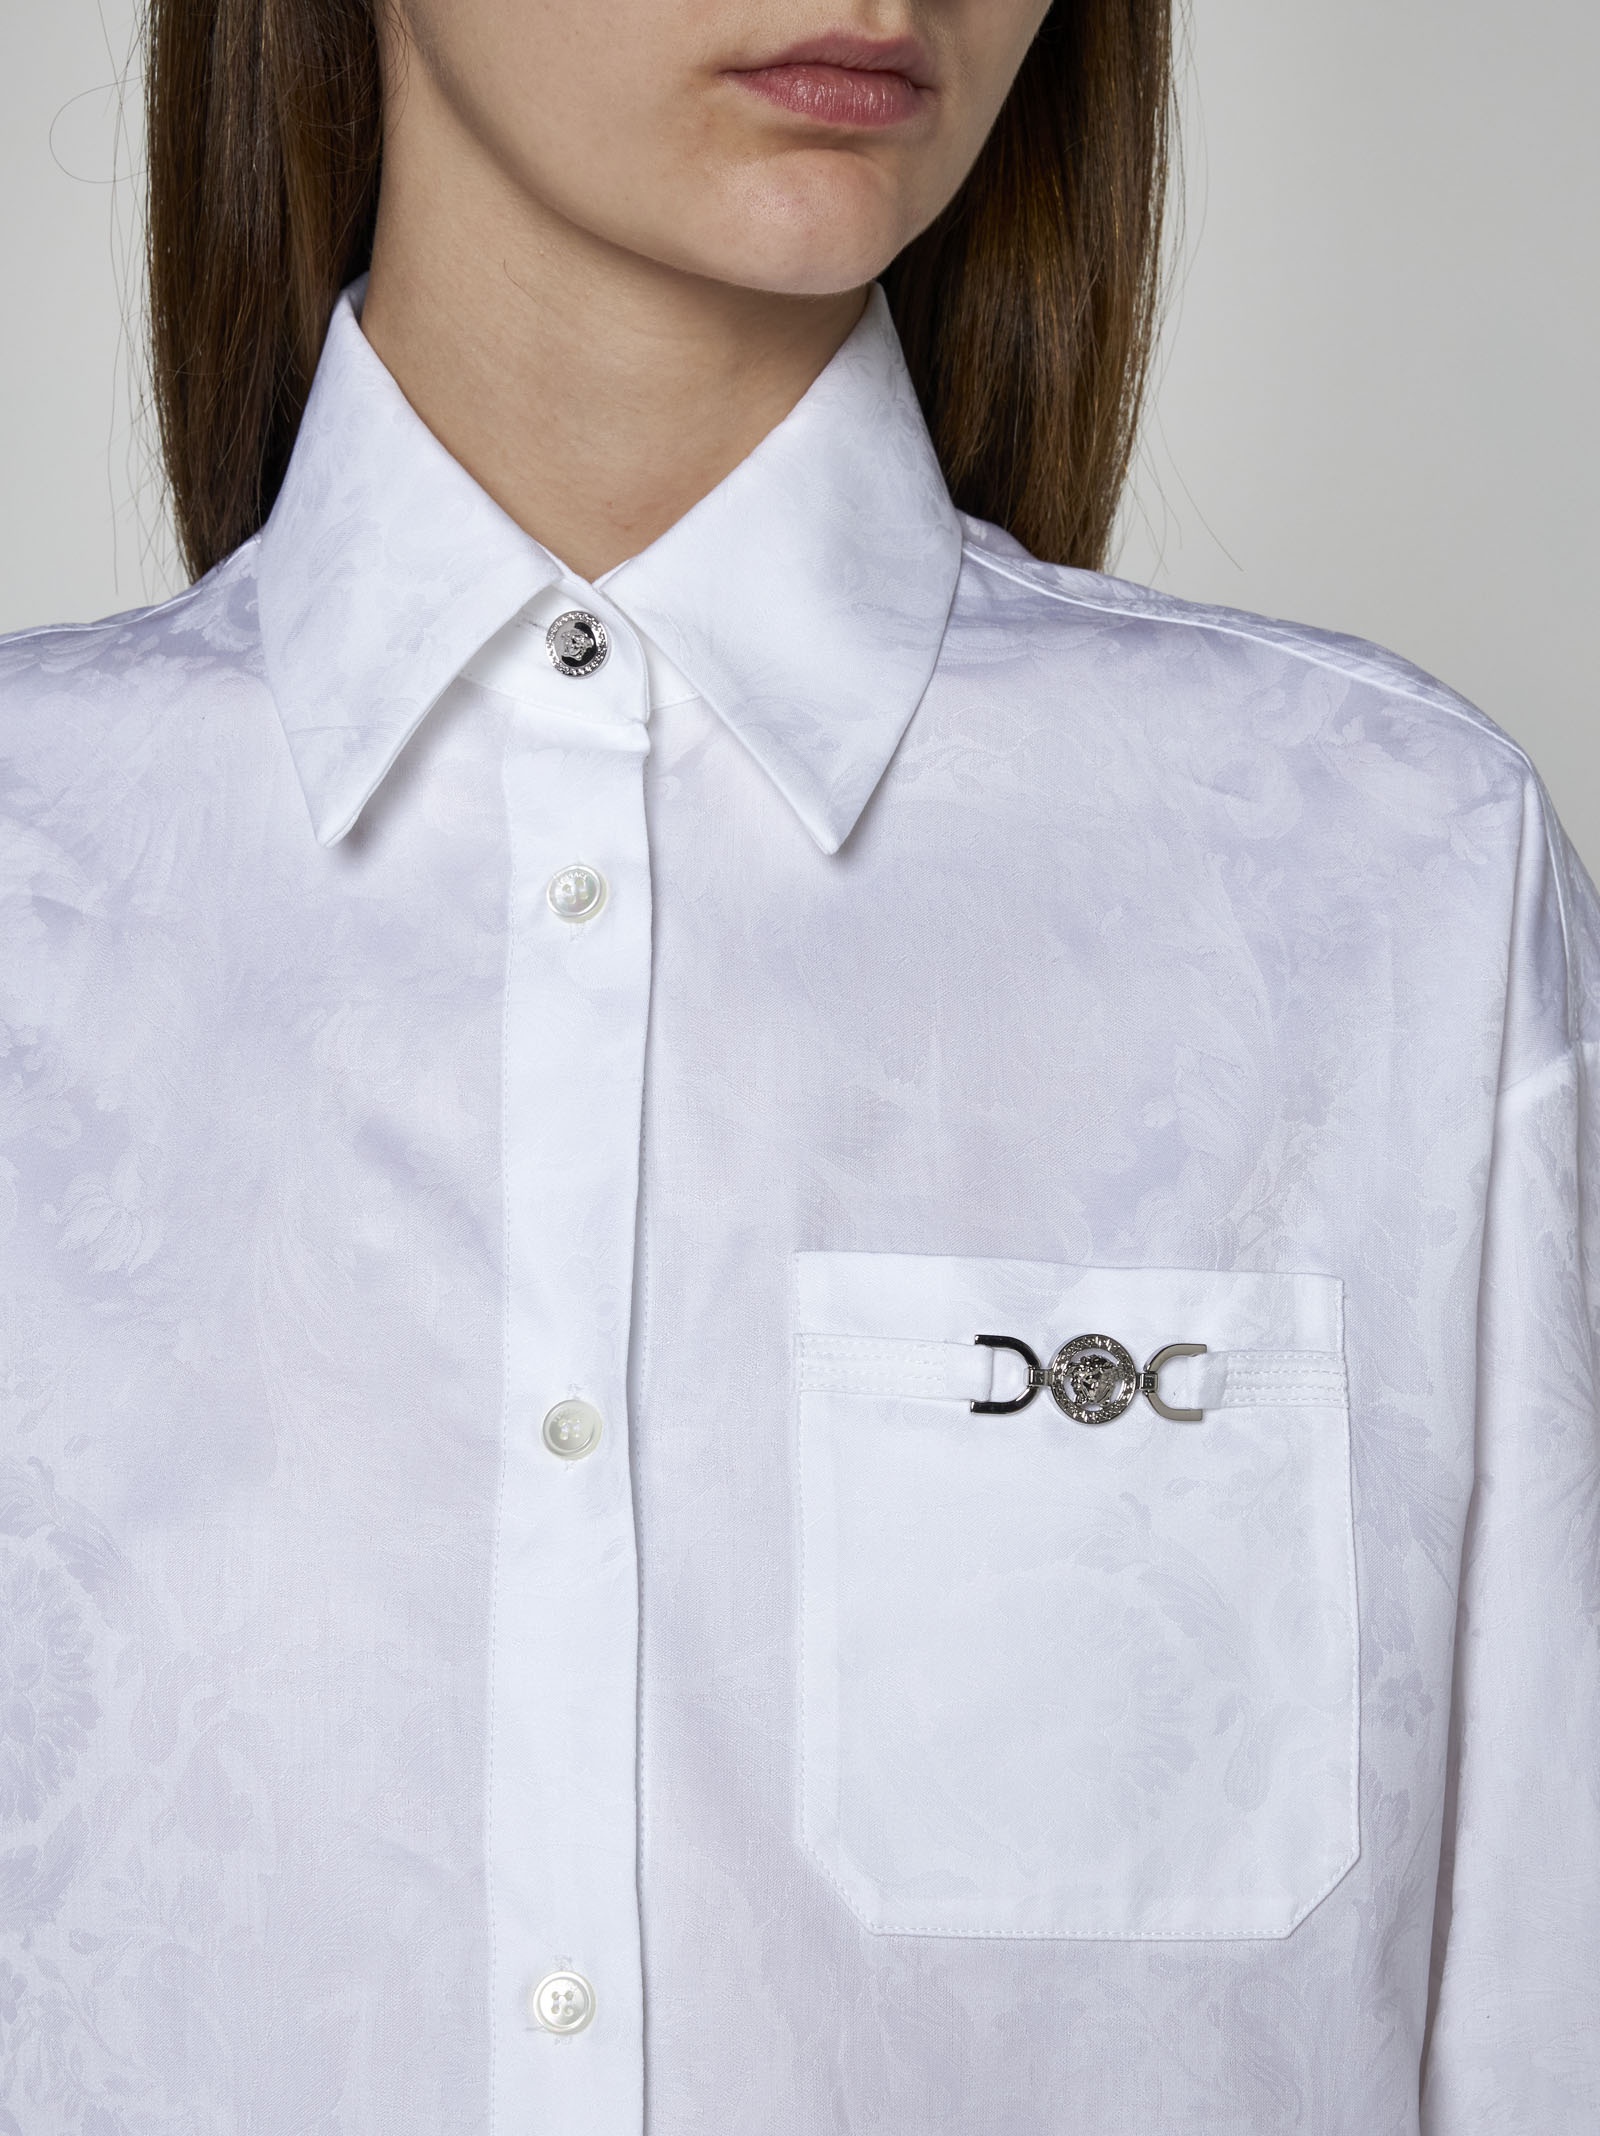 Barocco cotton shirt - 5